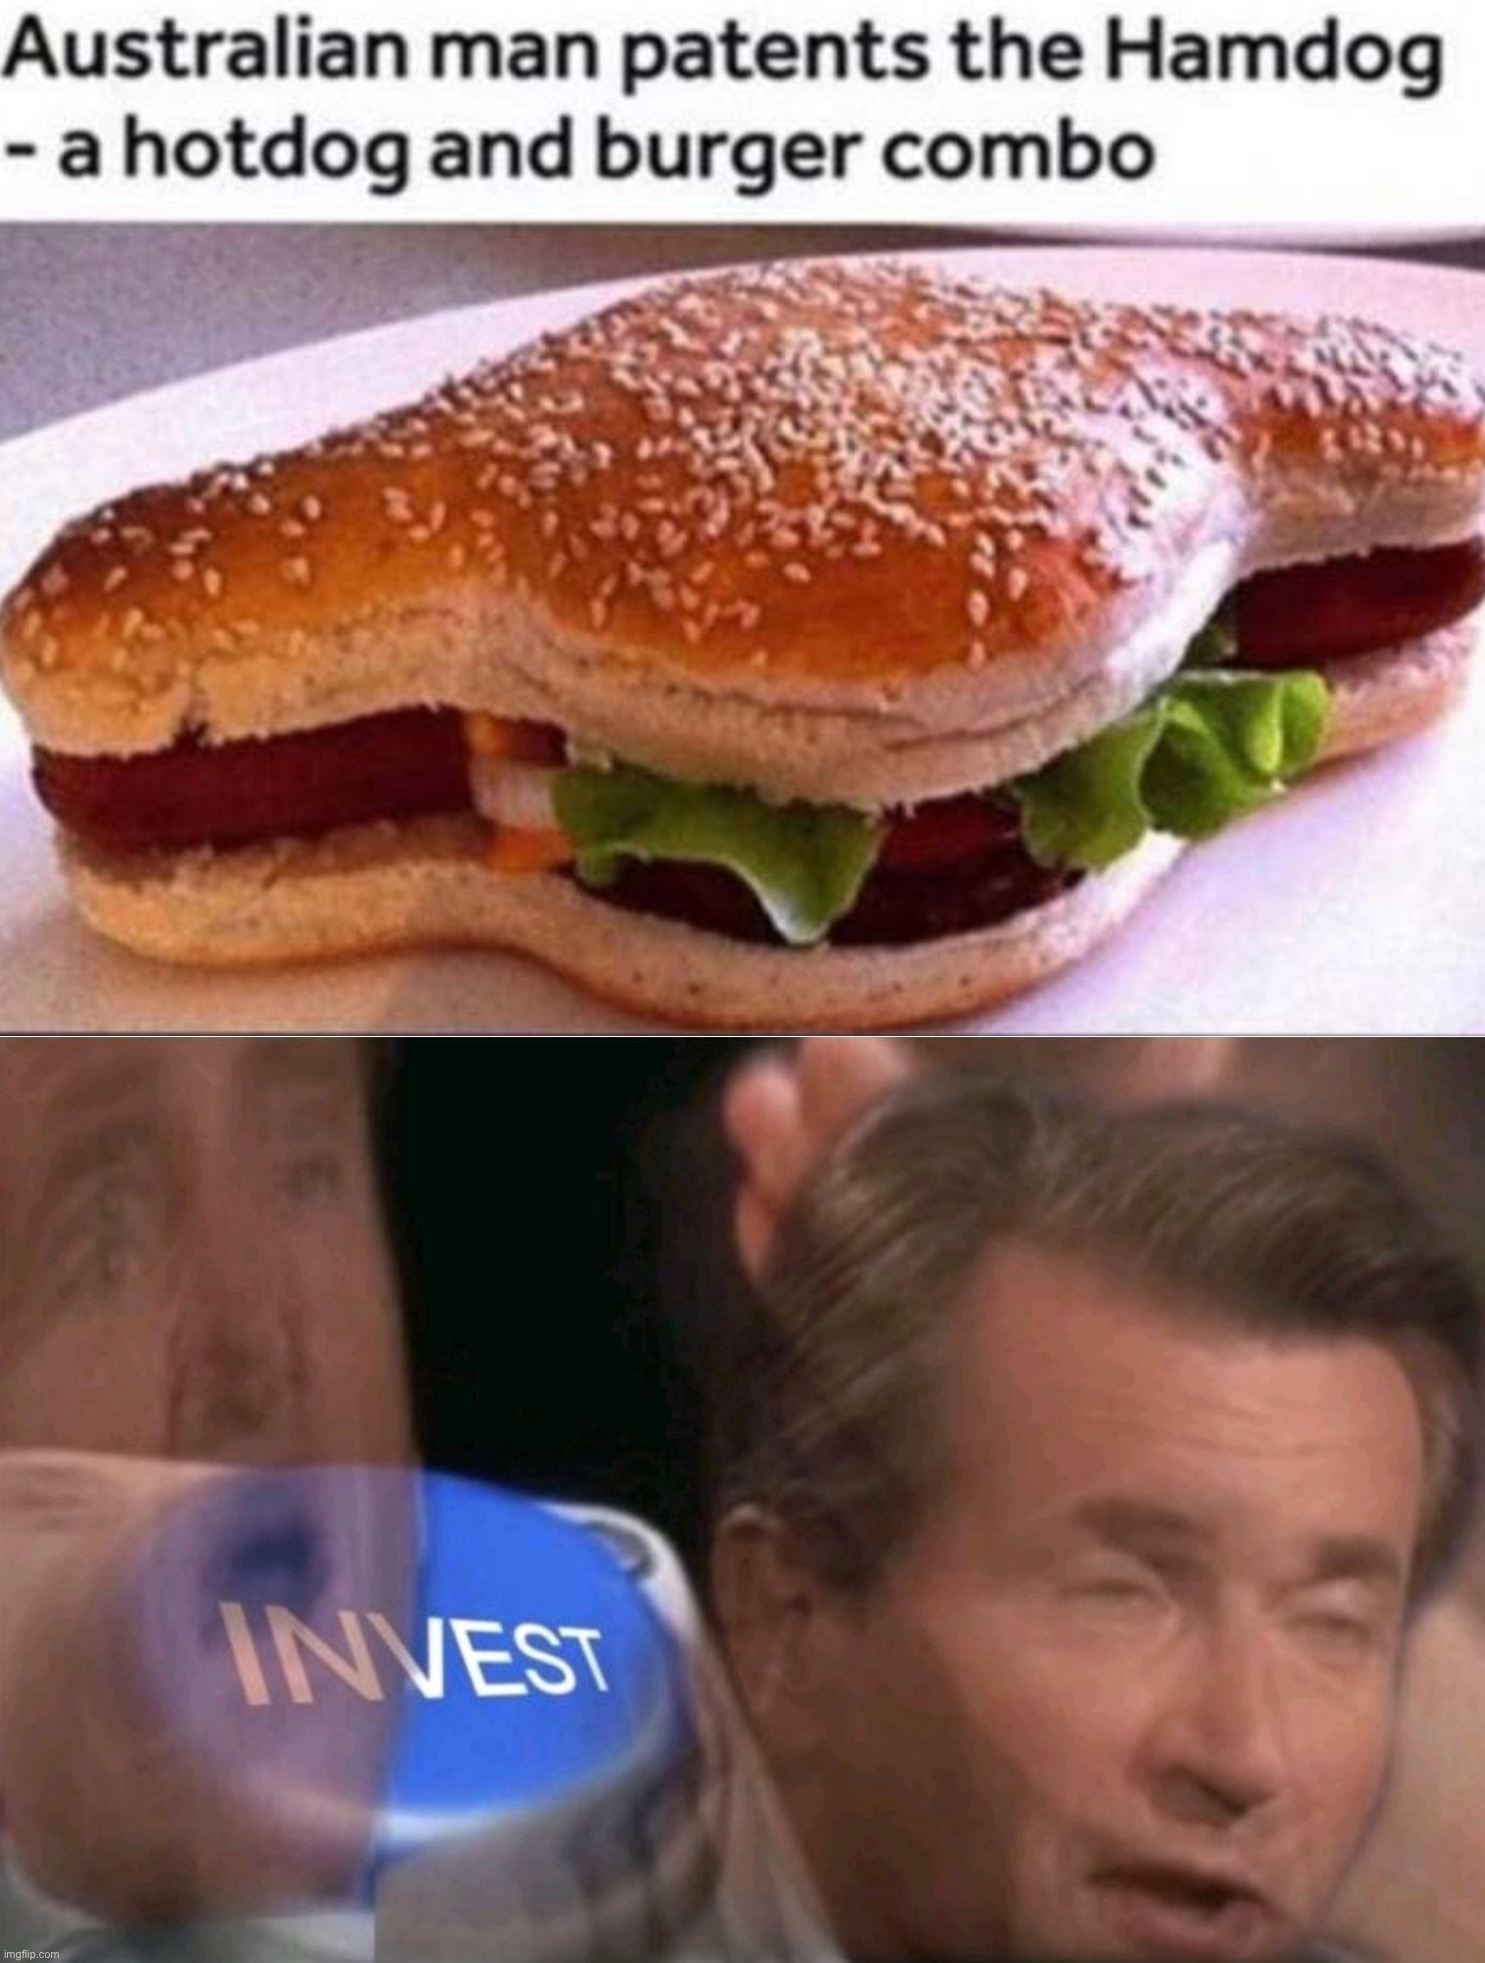 I love the hamdog | image tagged in invest,memes,funny,hamdog,hamburger,hot dog | made w/ Imgflip meme maker